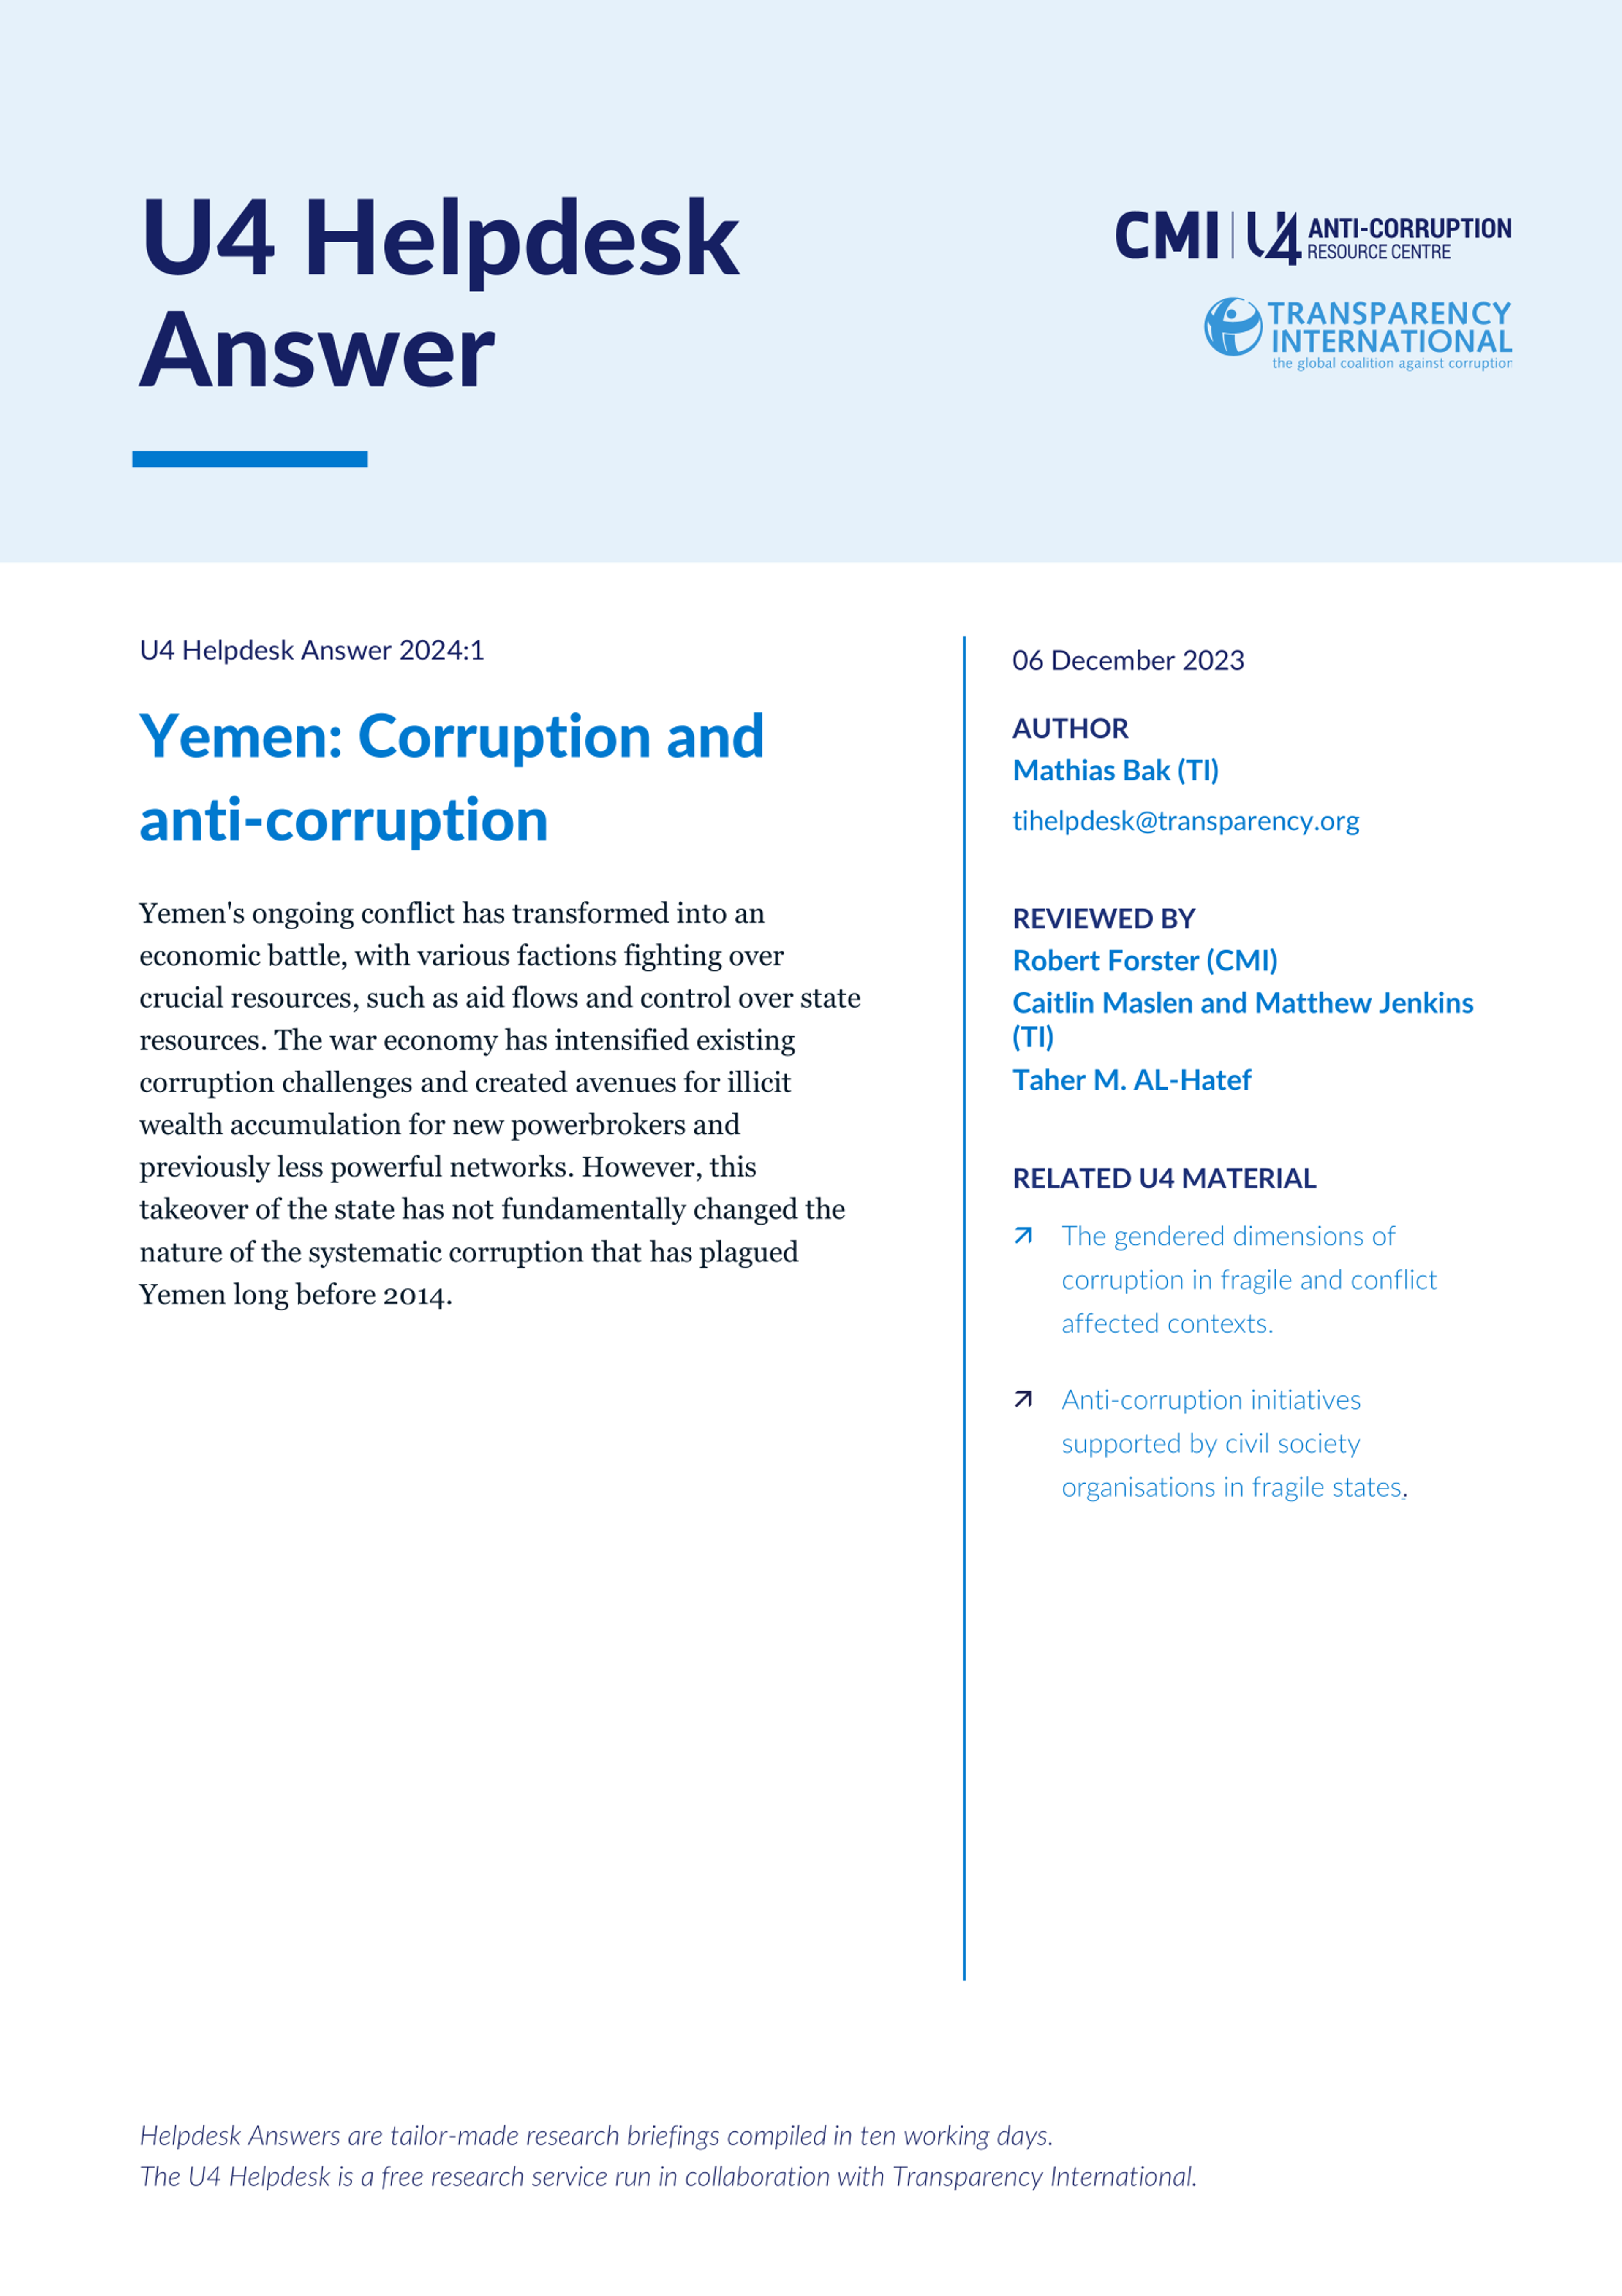 Yemen: Corruption and anti-corruption